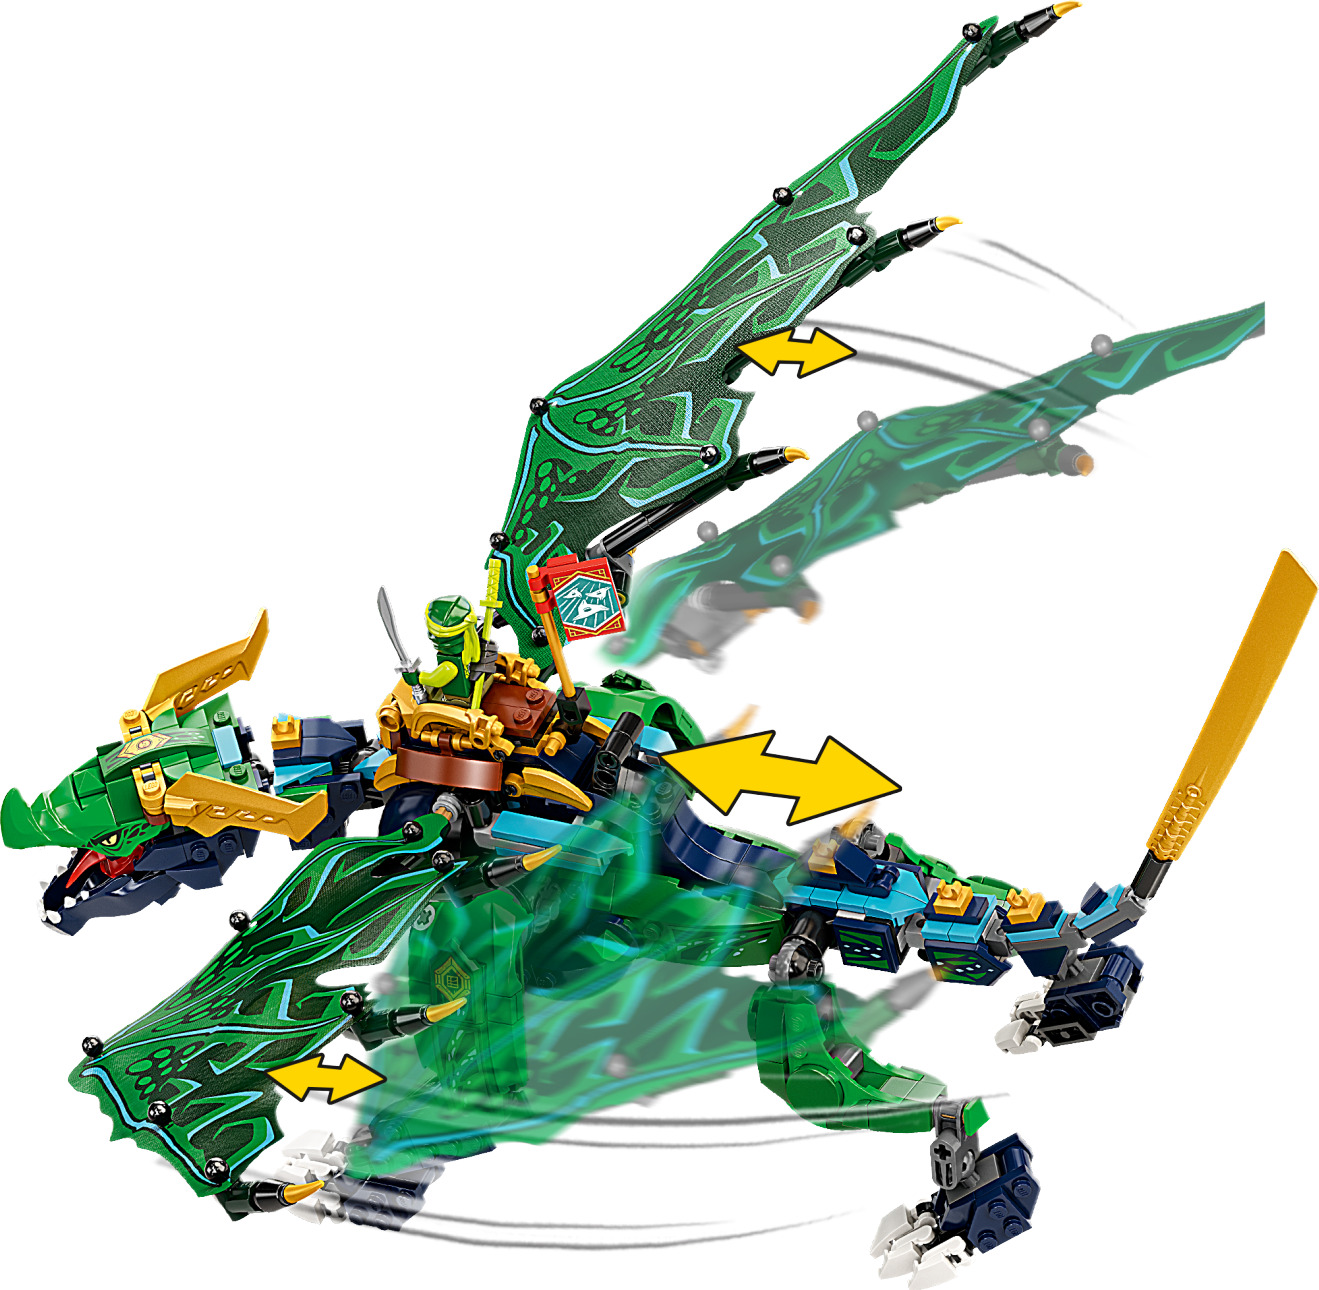 LEGO Ninjago 71766 Lloyd's Legendary Dragon – You want wings with